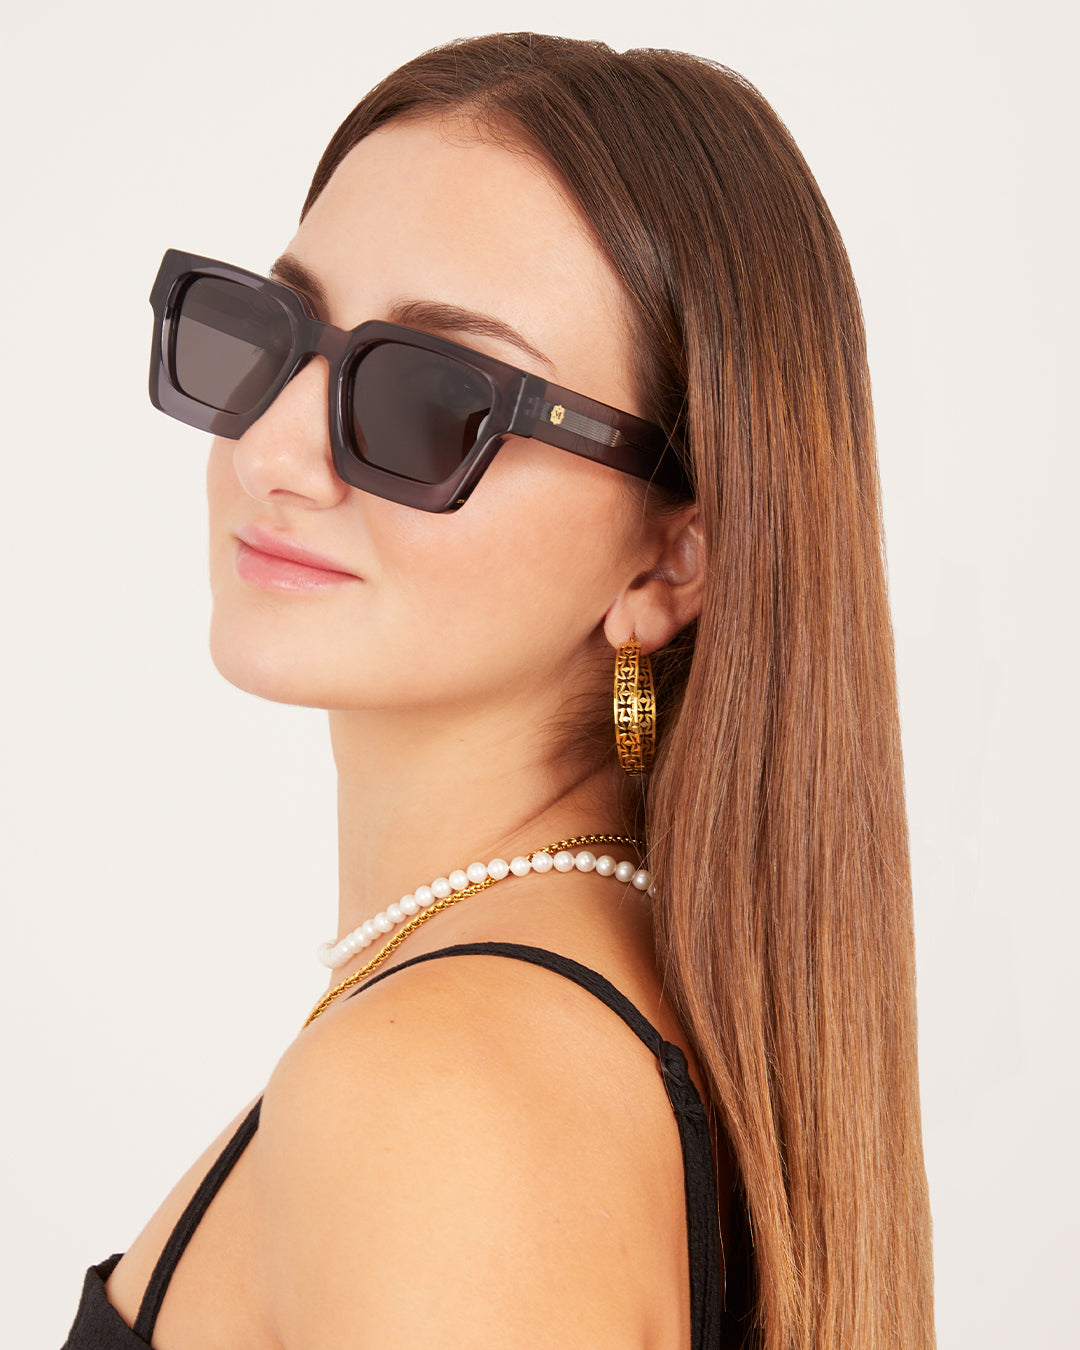 Naxxar Valiant Grey Sunglasses